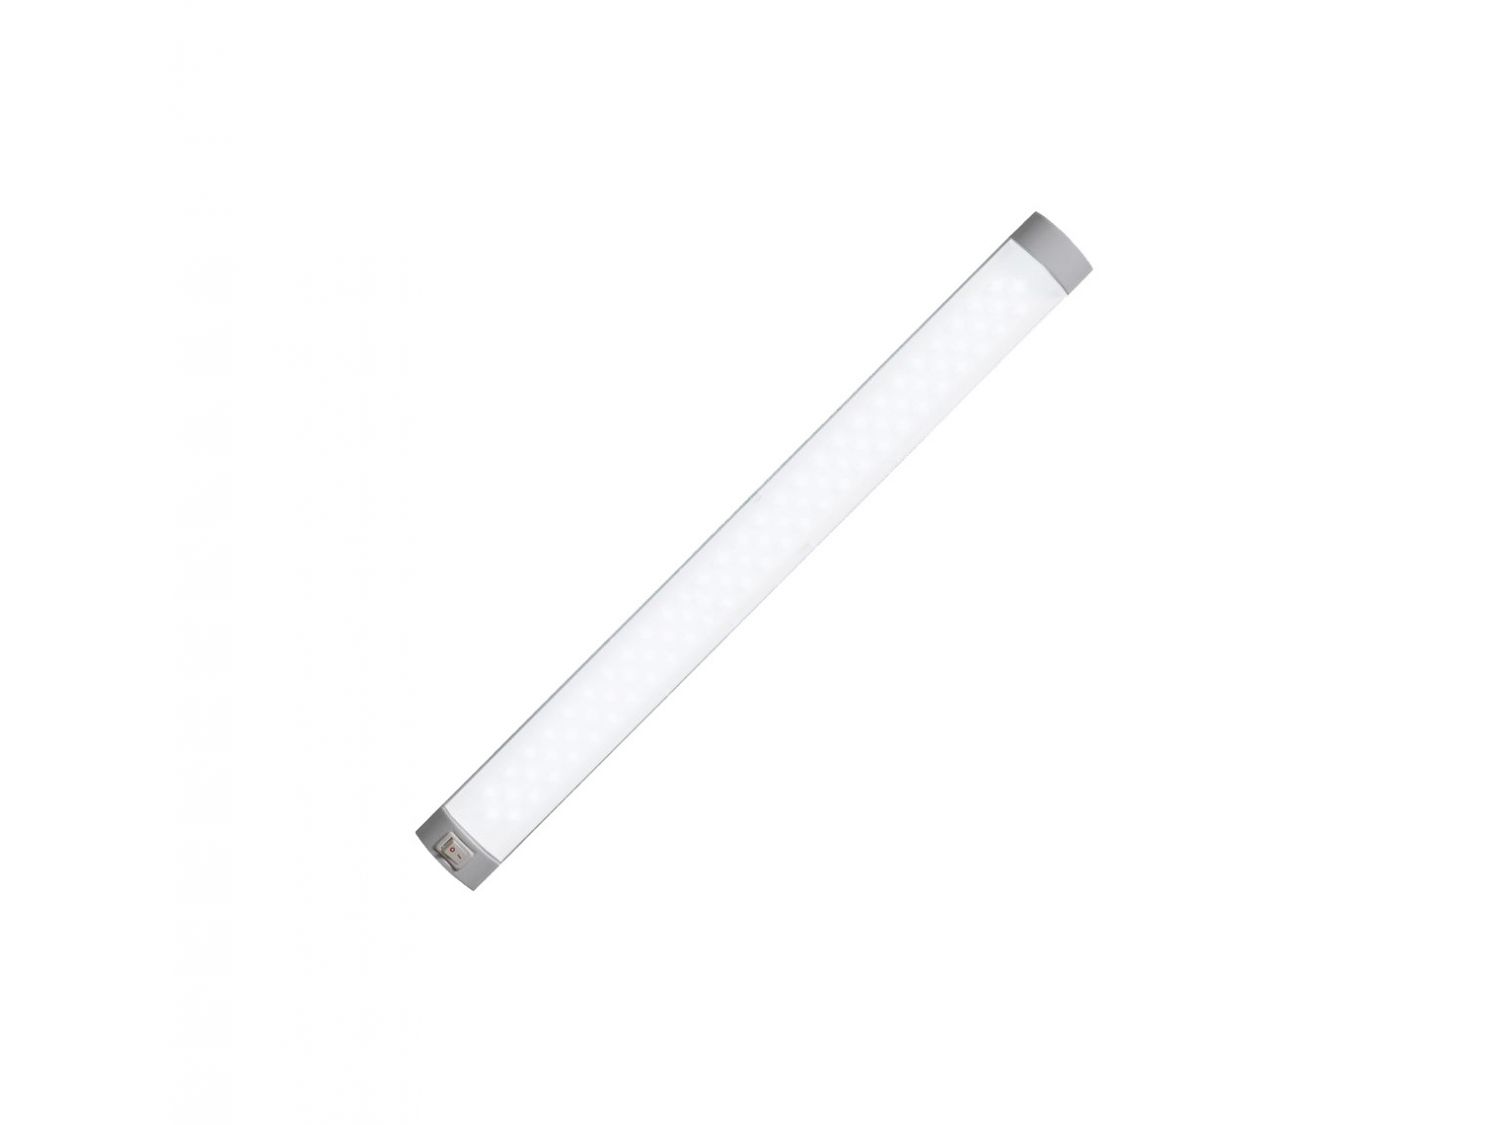 Leyton Lighting Cool white LED linkable strip light 250mm, white, 3w 